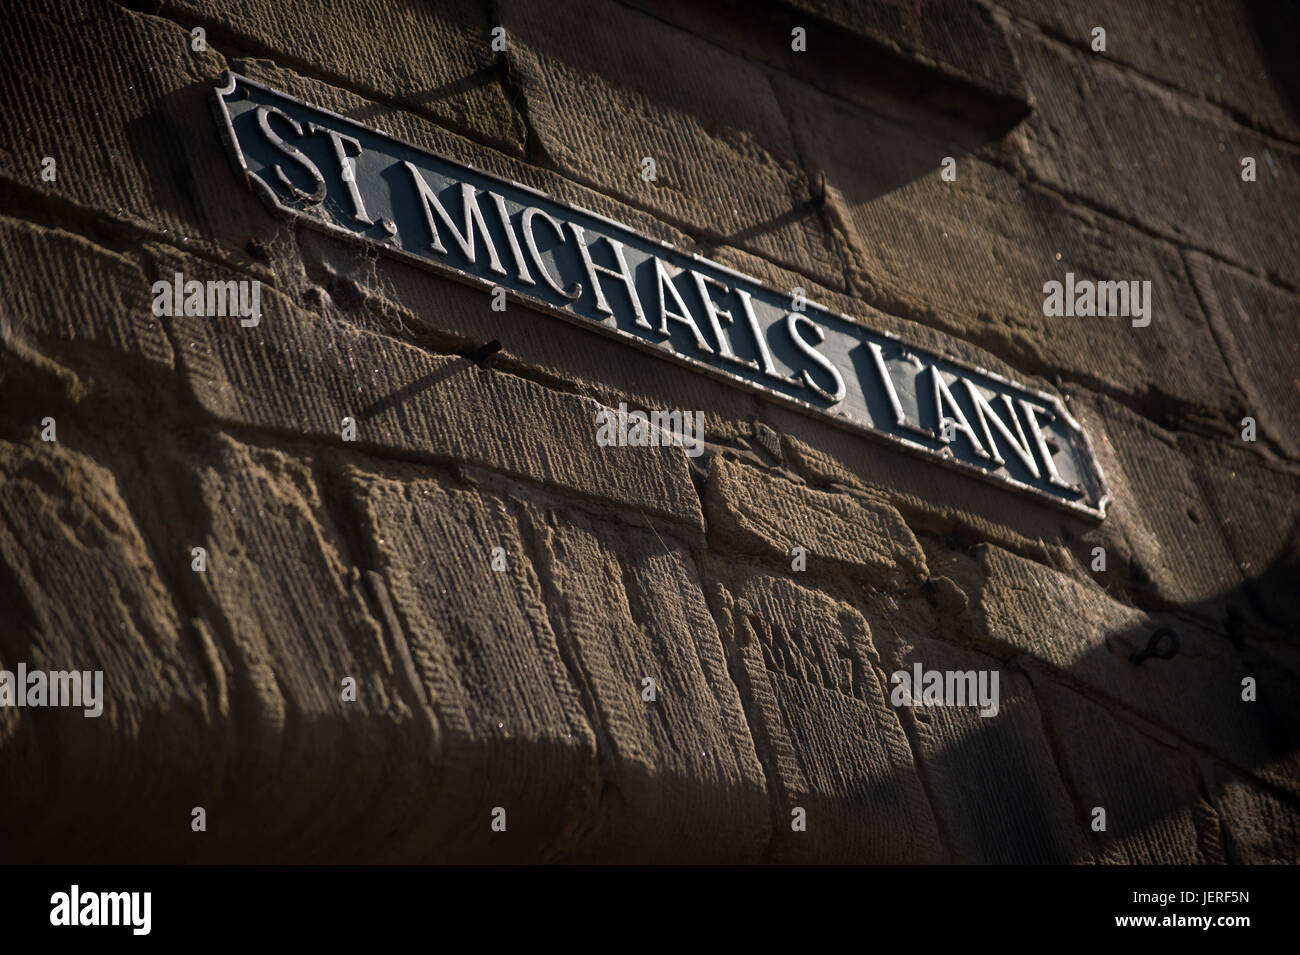 St Michaels Lane street sign, Alnwick, Northumberland Stock Photo